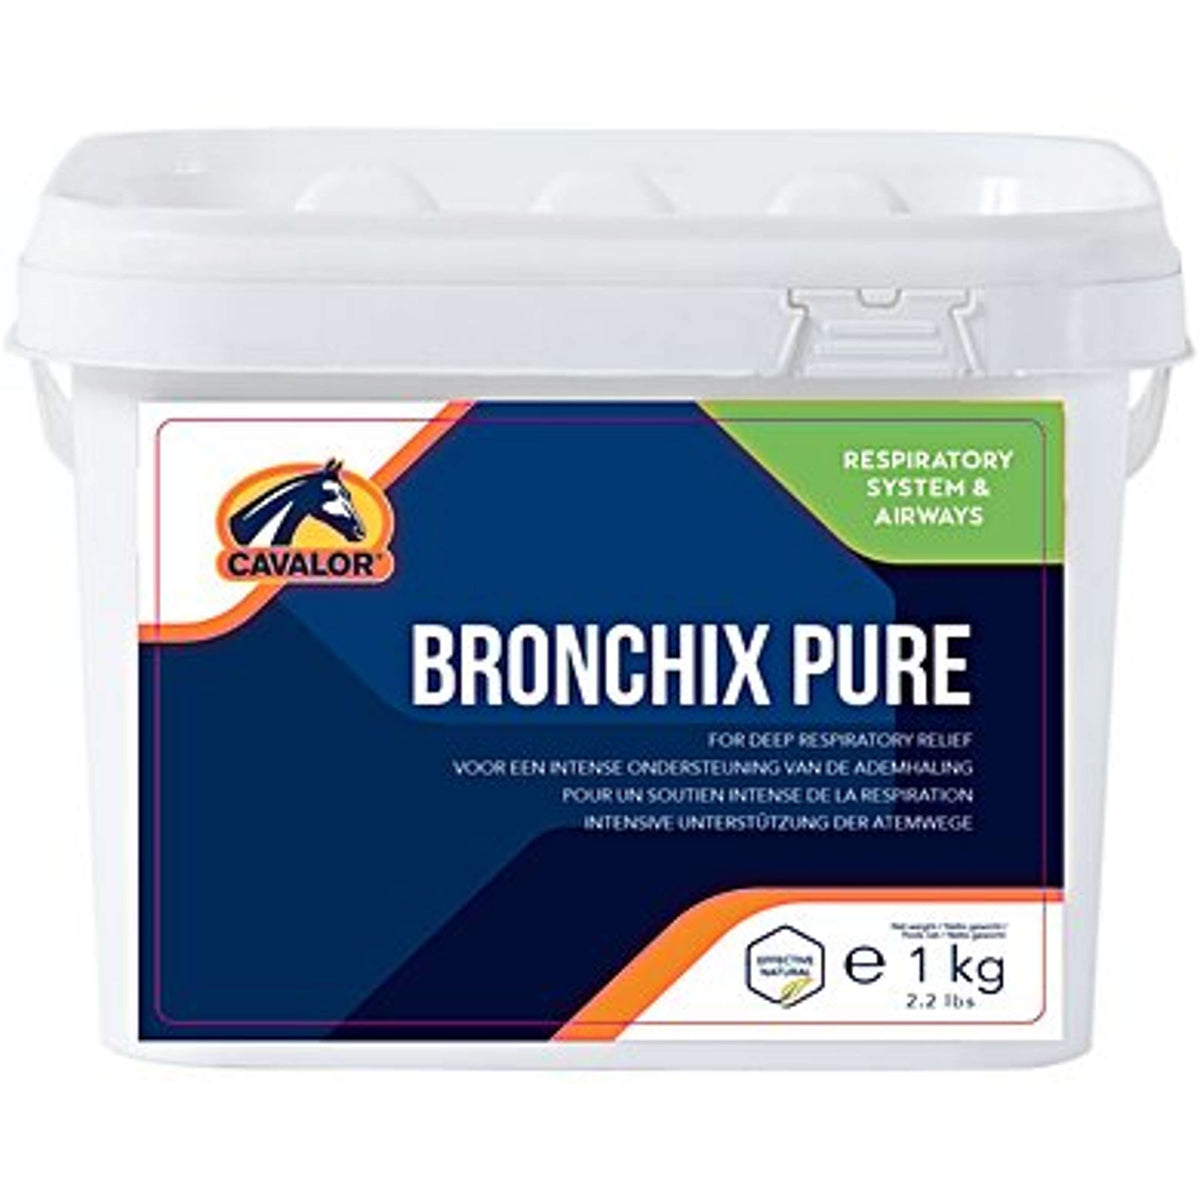 Cavalor Bronchix Pure